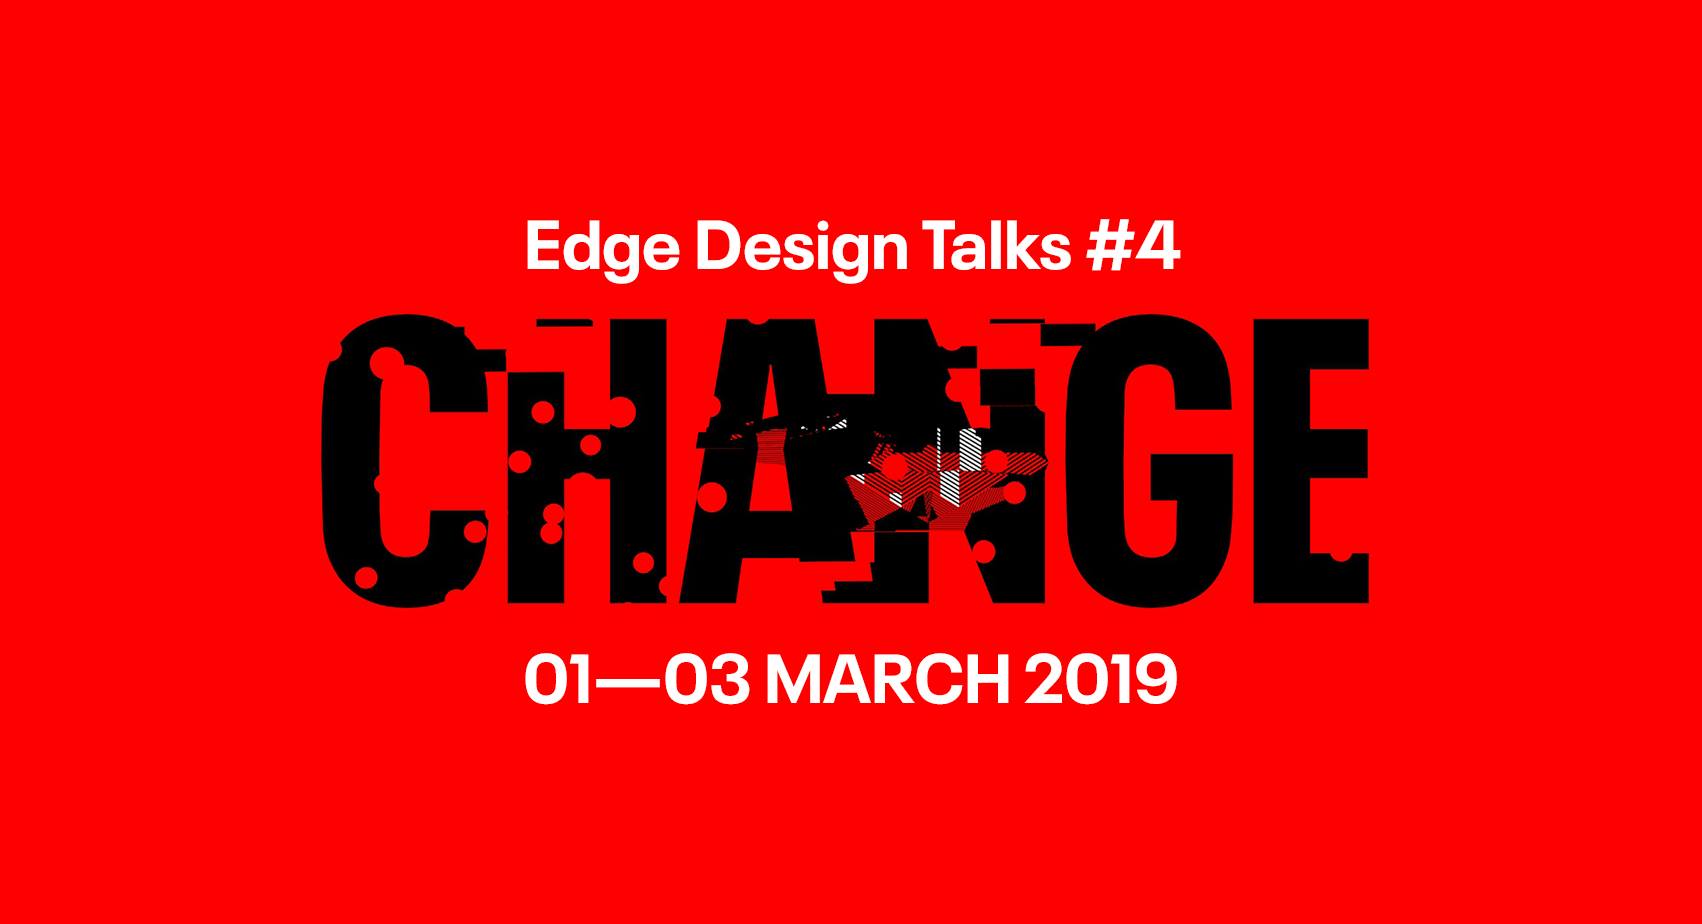 Edge Design Talks #4 – Workshops